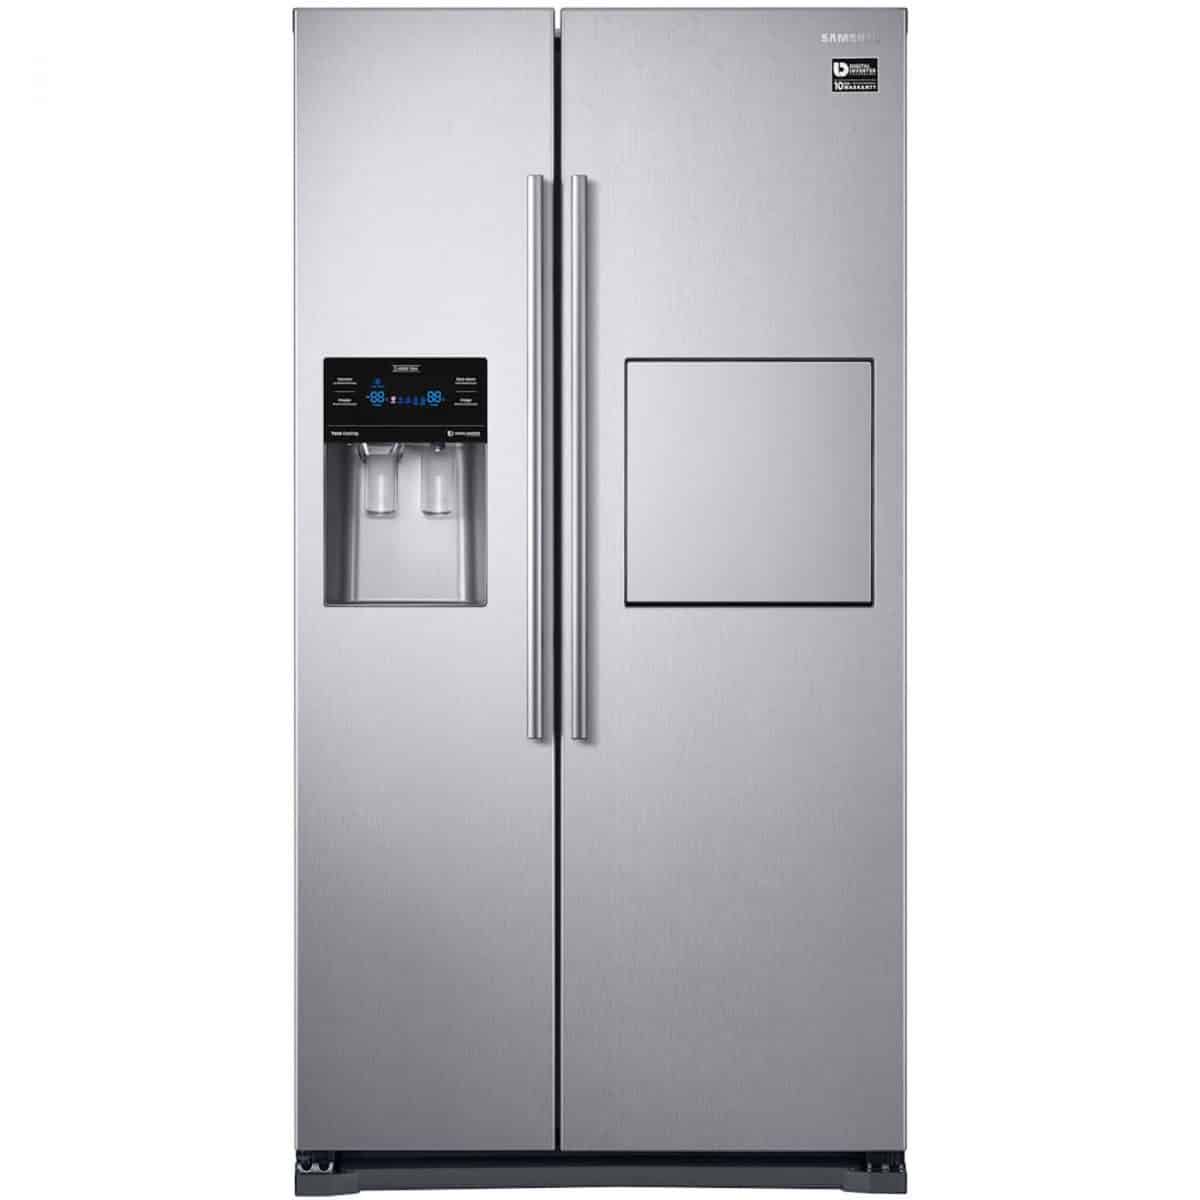 Spiksplinternieuw Samsung RS53K4600SA/EF - Amerikaanse koelkast - DealsTracker.nl TG-56